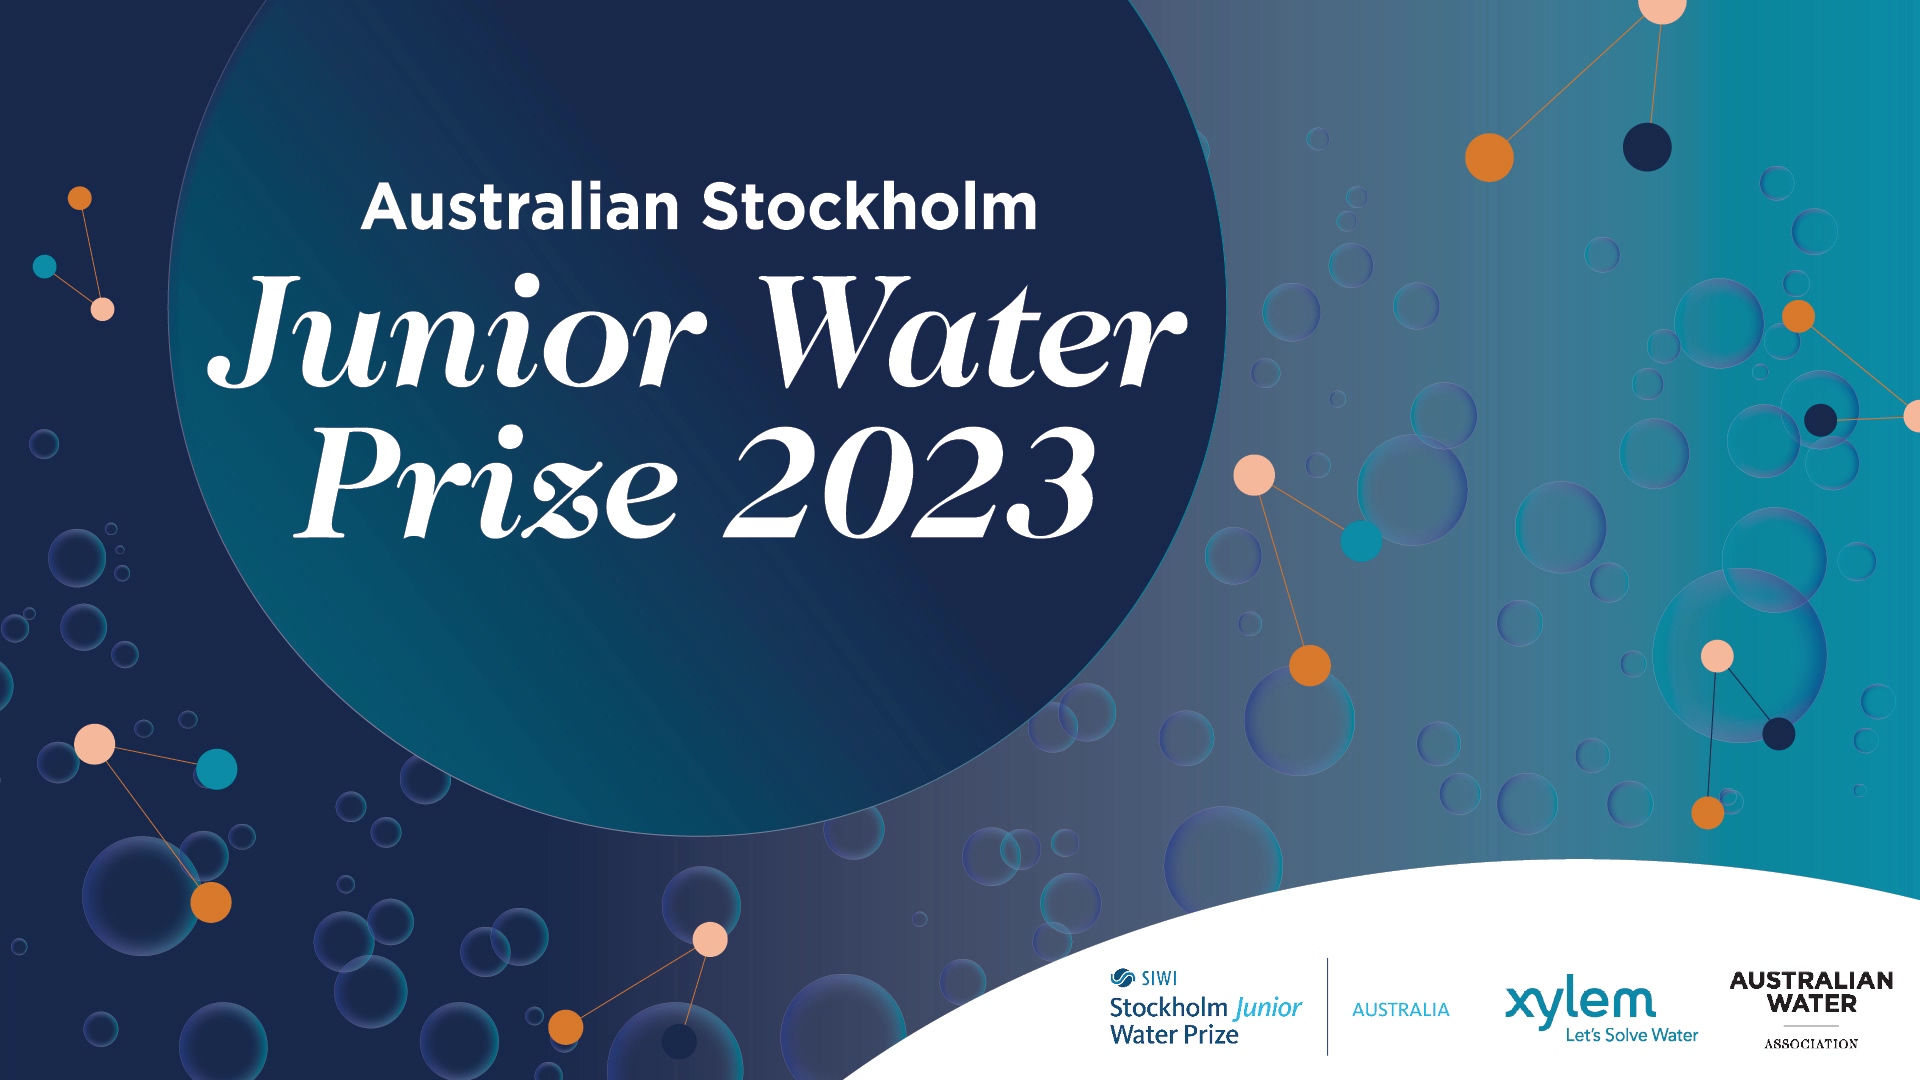 The Australian Stockholm Junior Water Prize